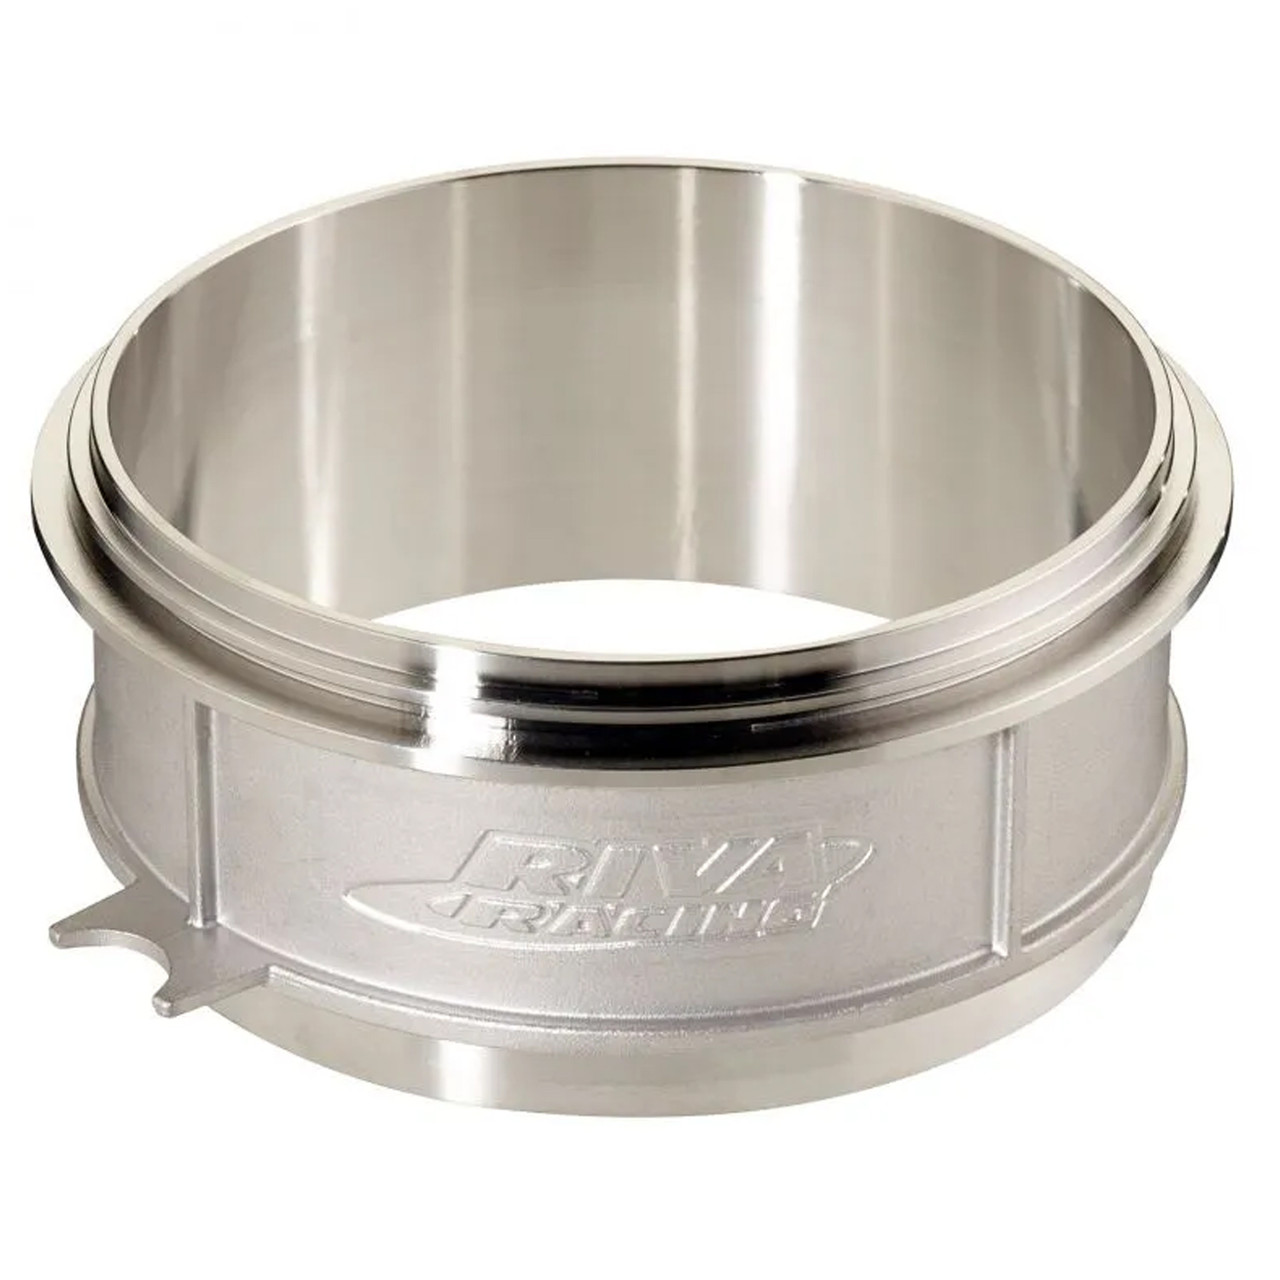 Sea-Doo New OEM, SPARK Riva Racing Durable Stainless Steel Wear Ring, 295100649